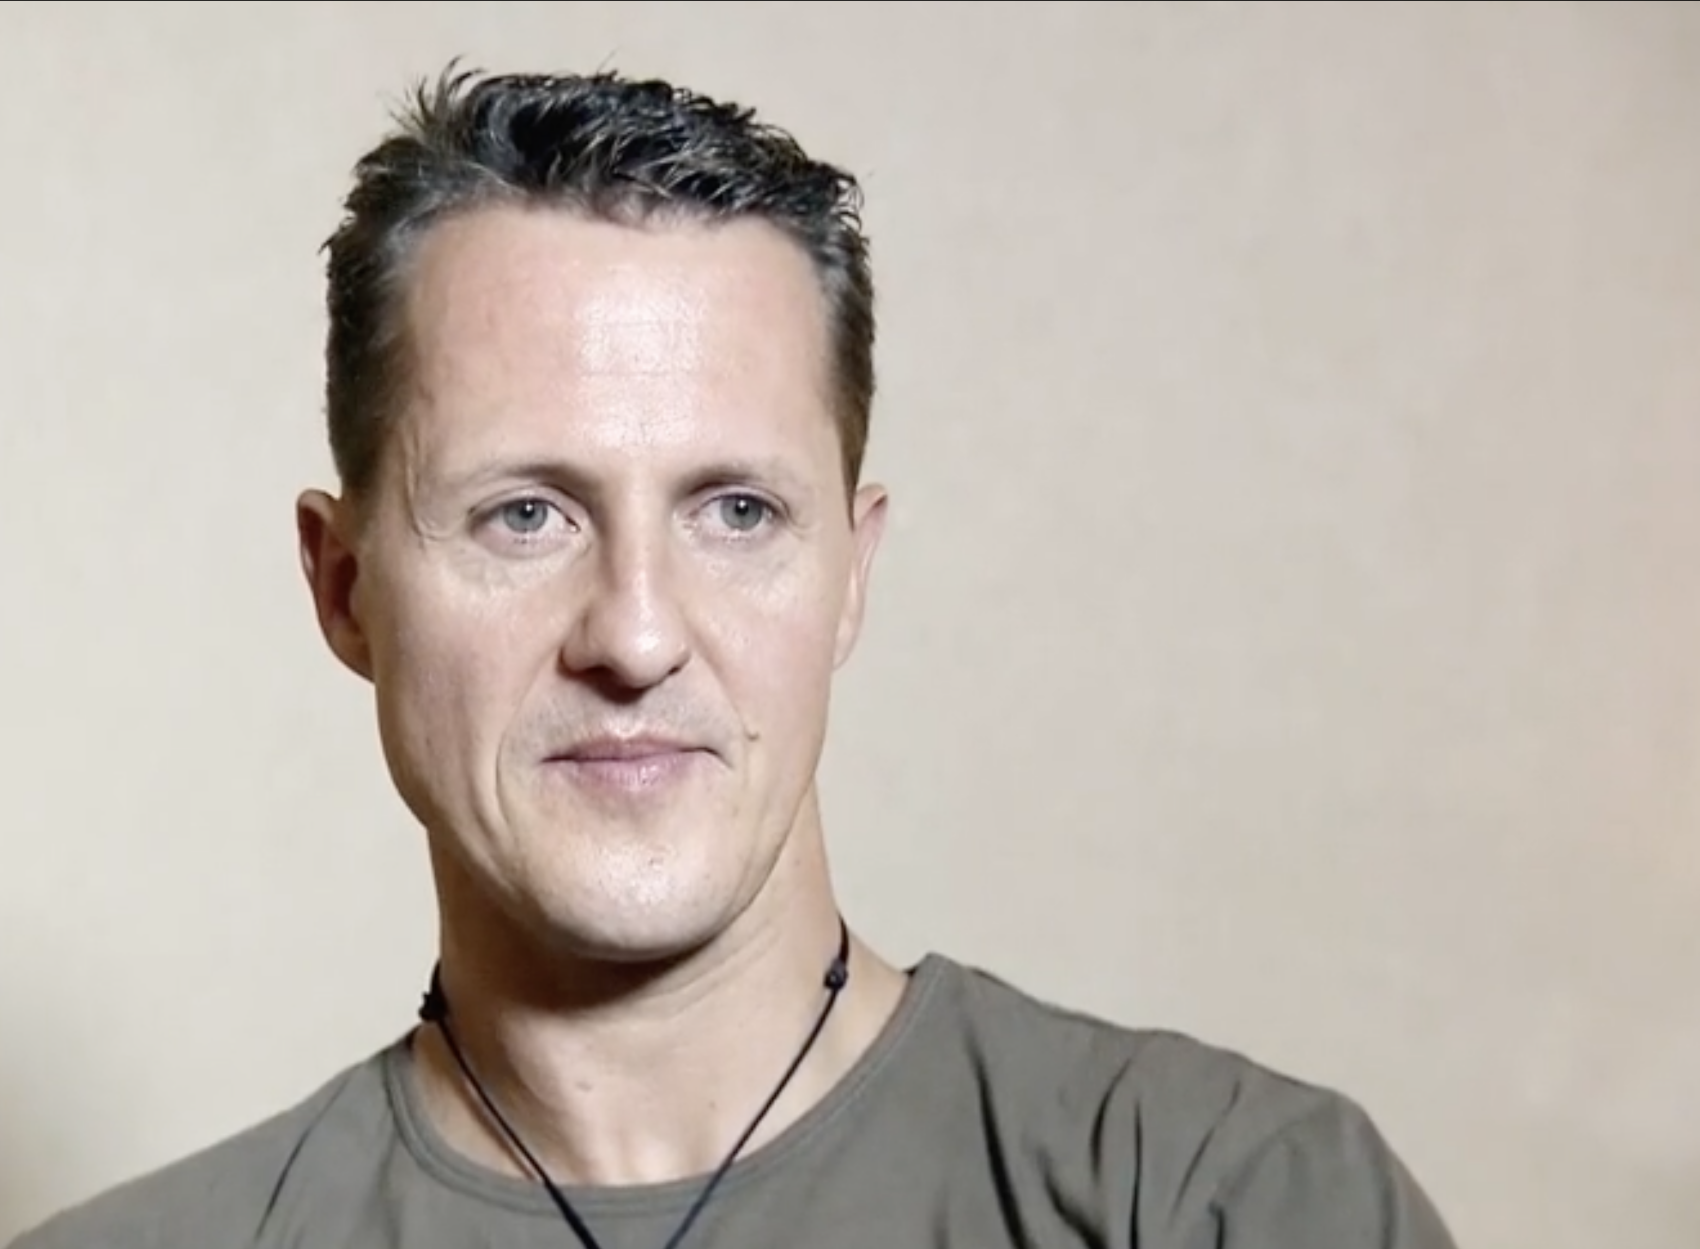 Michael Schumacher utolsó interjú